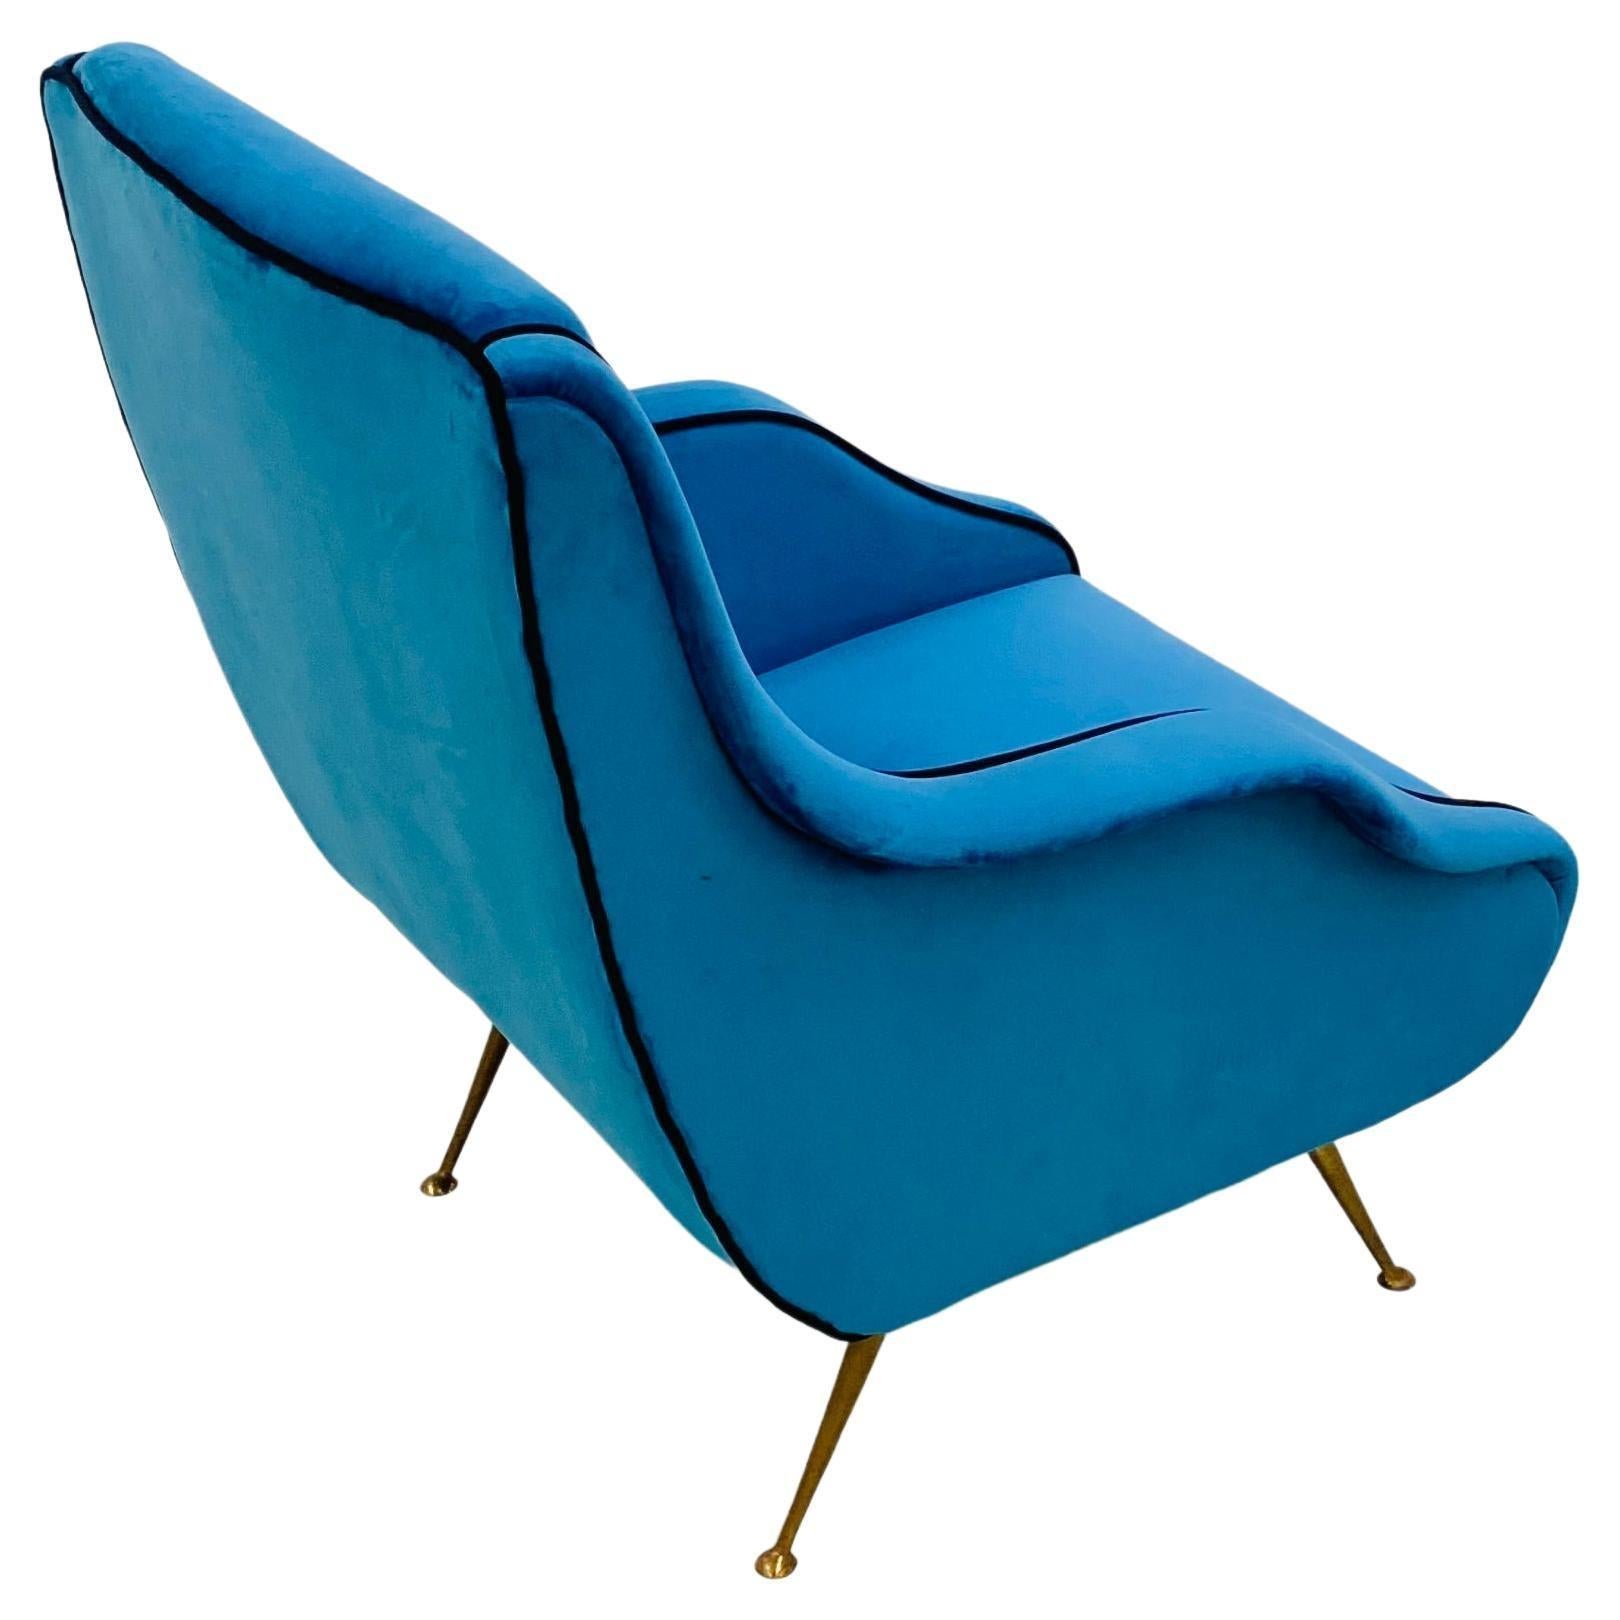 Vintage Italian Blue Velvet Armchair with Brass Legs by Carlo de Carli, 1950s For Sale 9